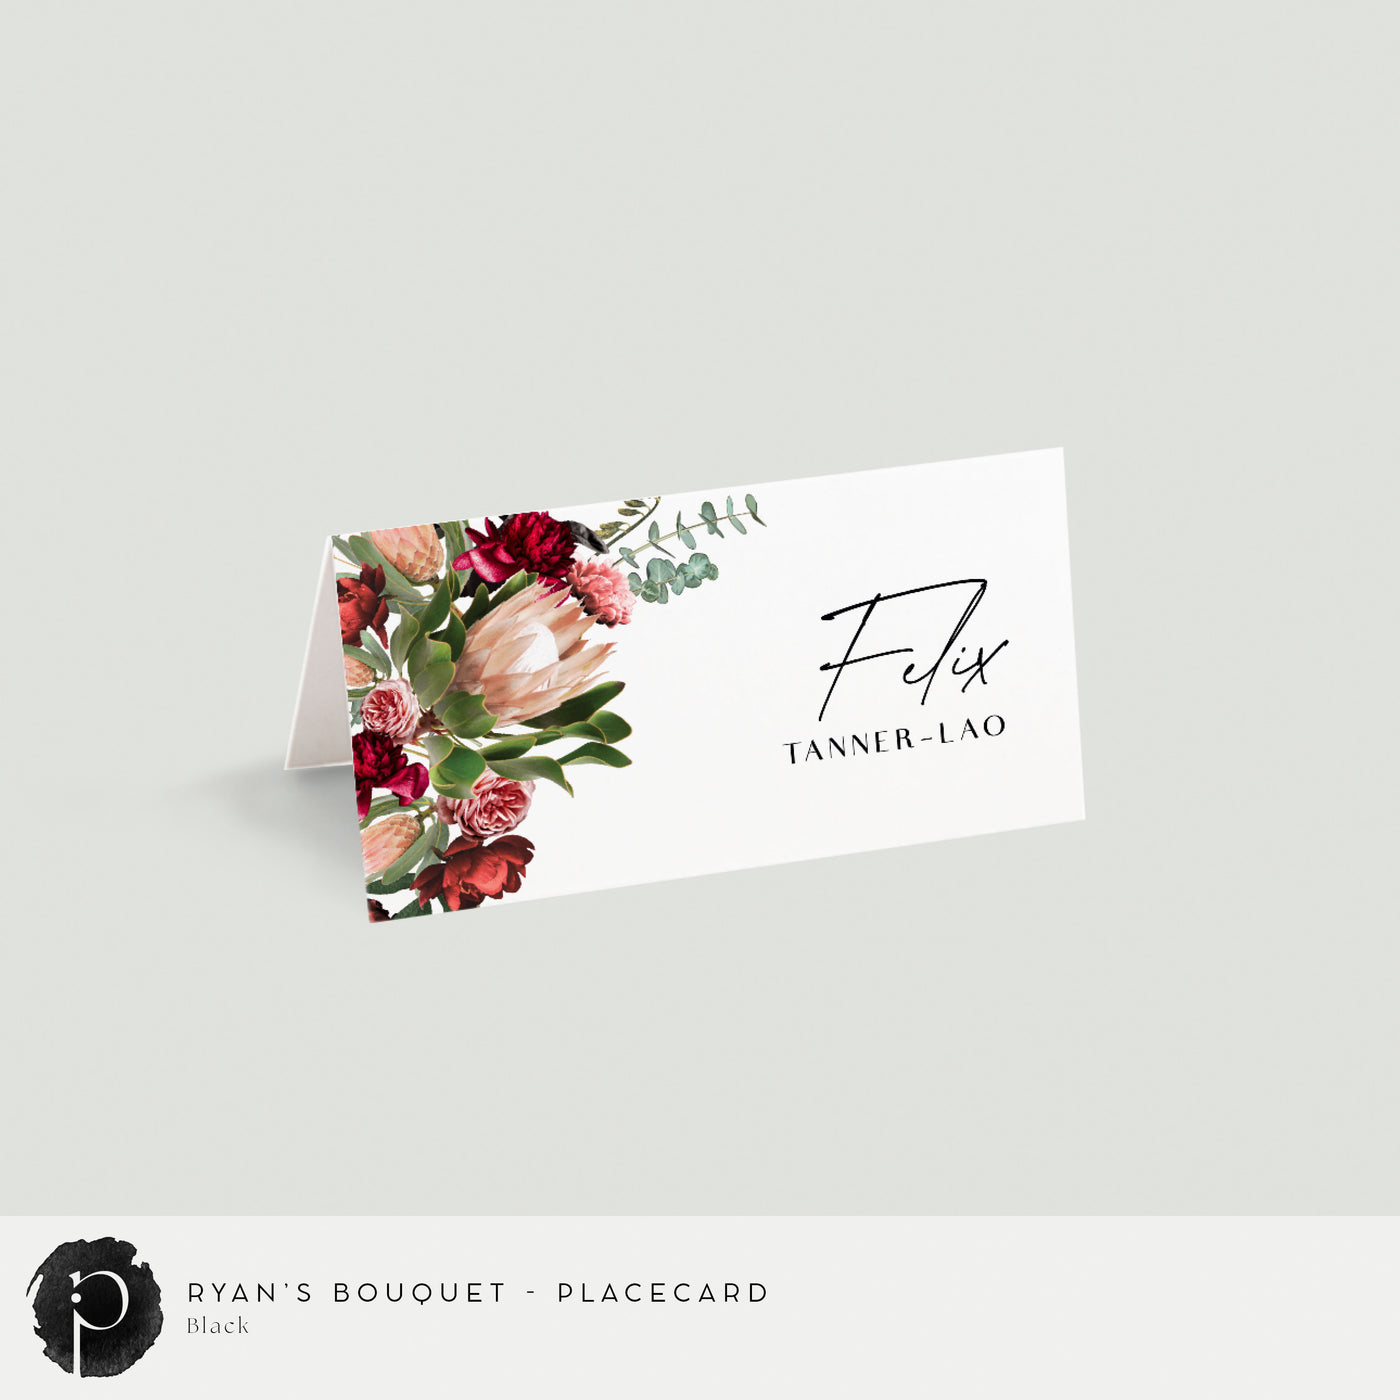 Ryan's Bouquet - Place Cards